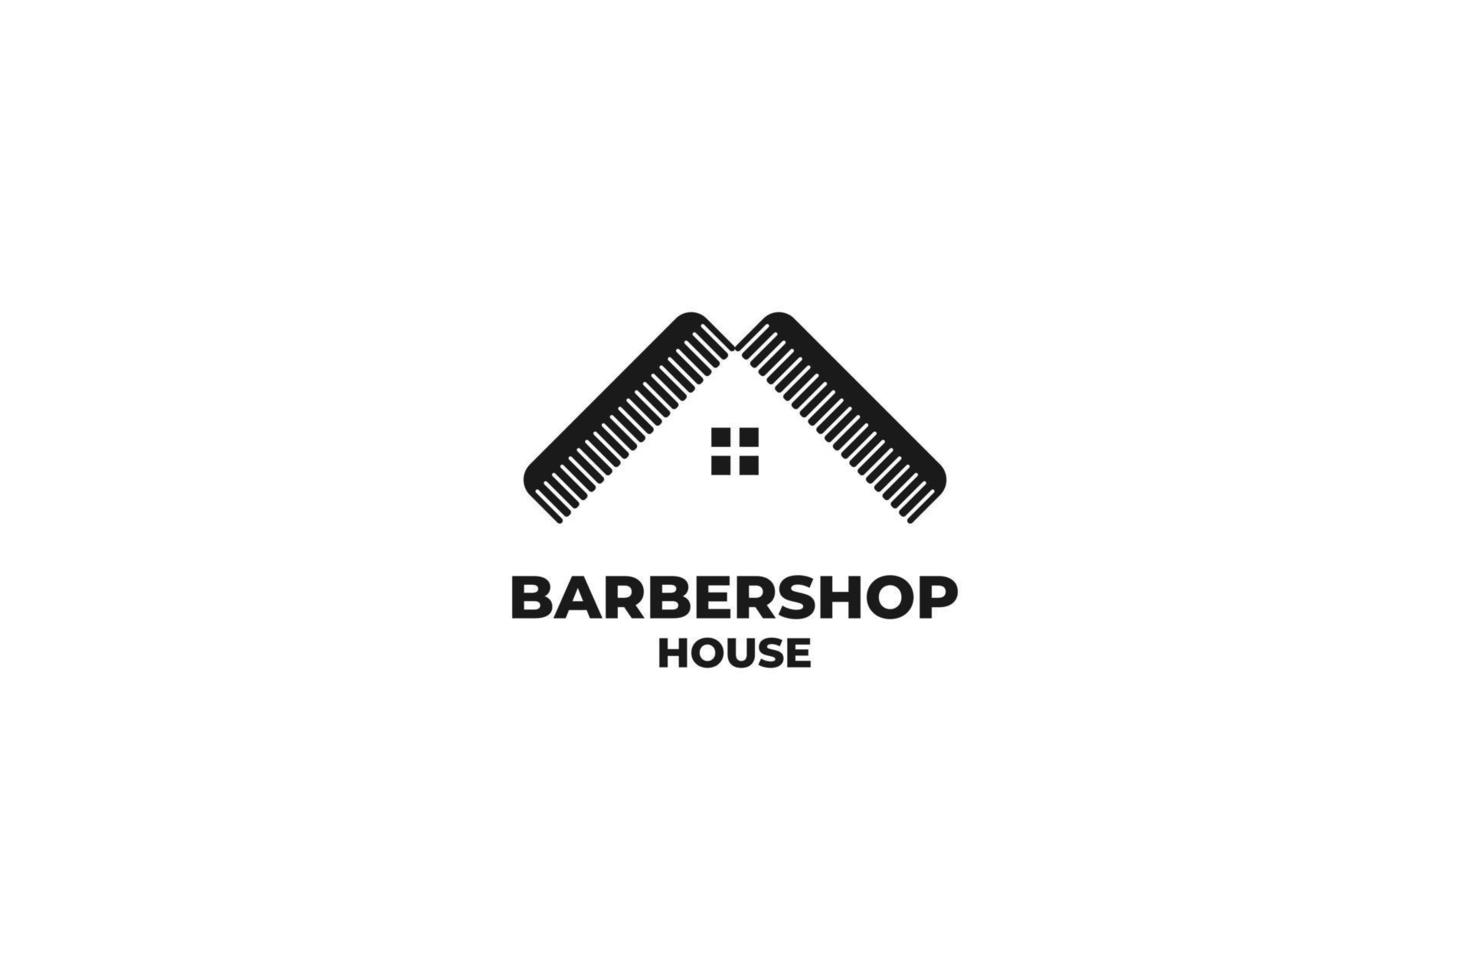 Flat tools barber house logo design vector illustration